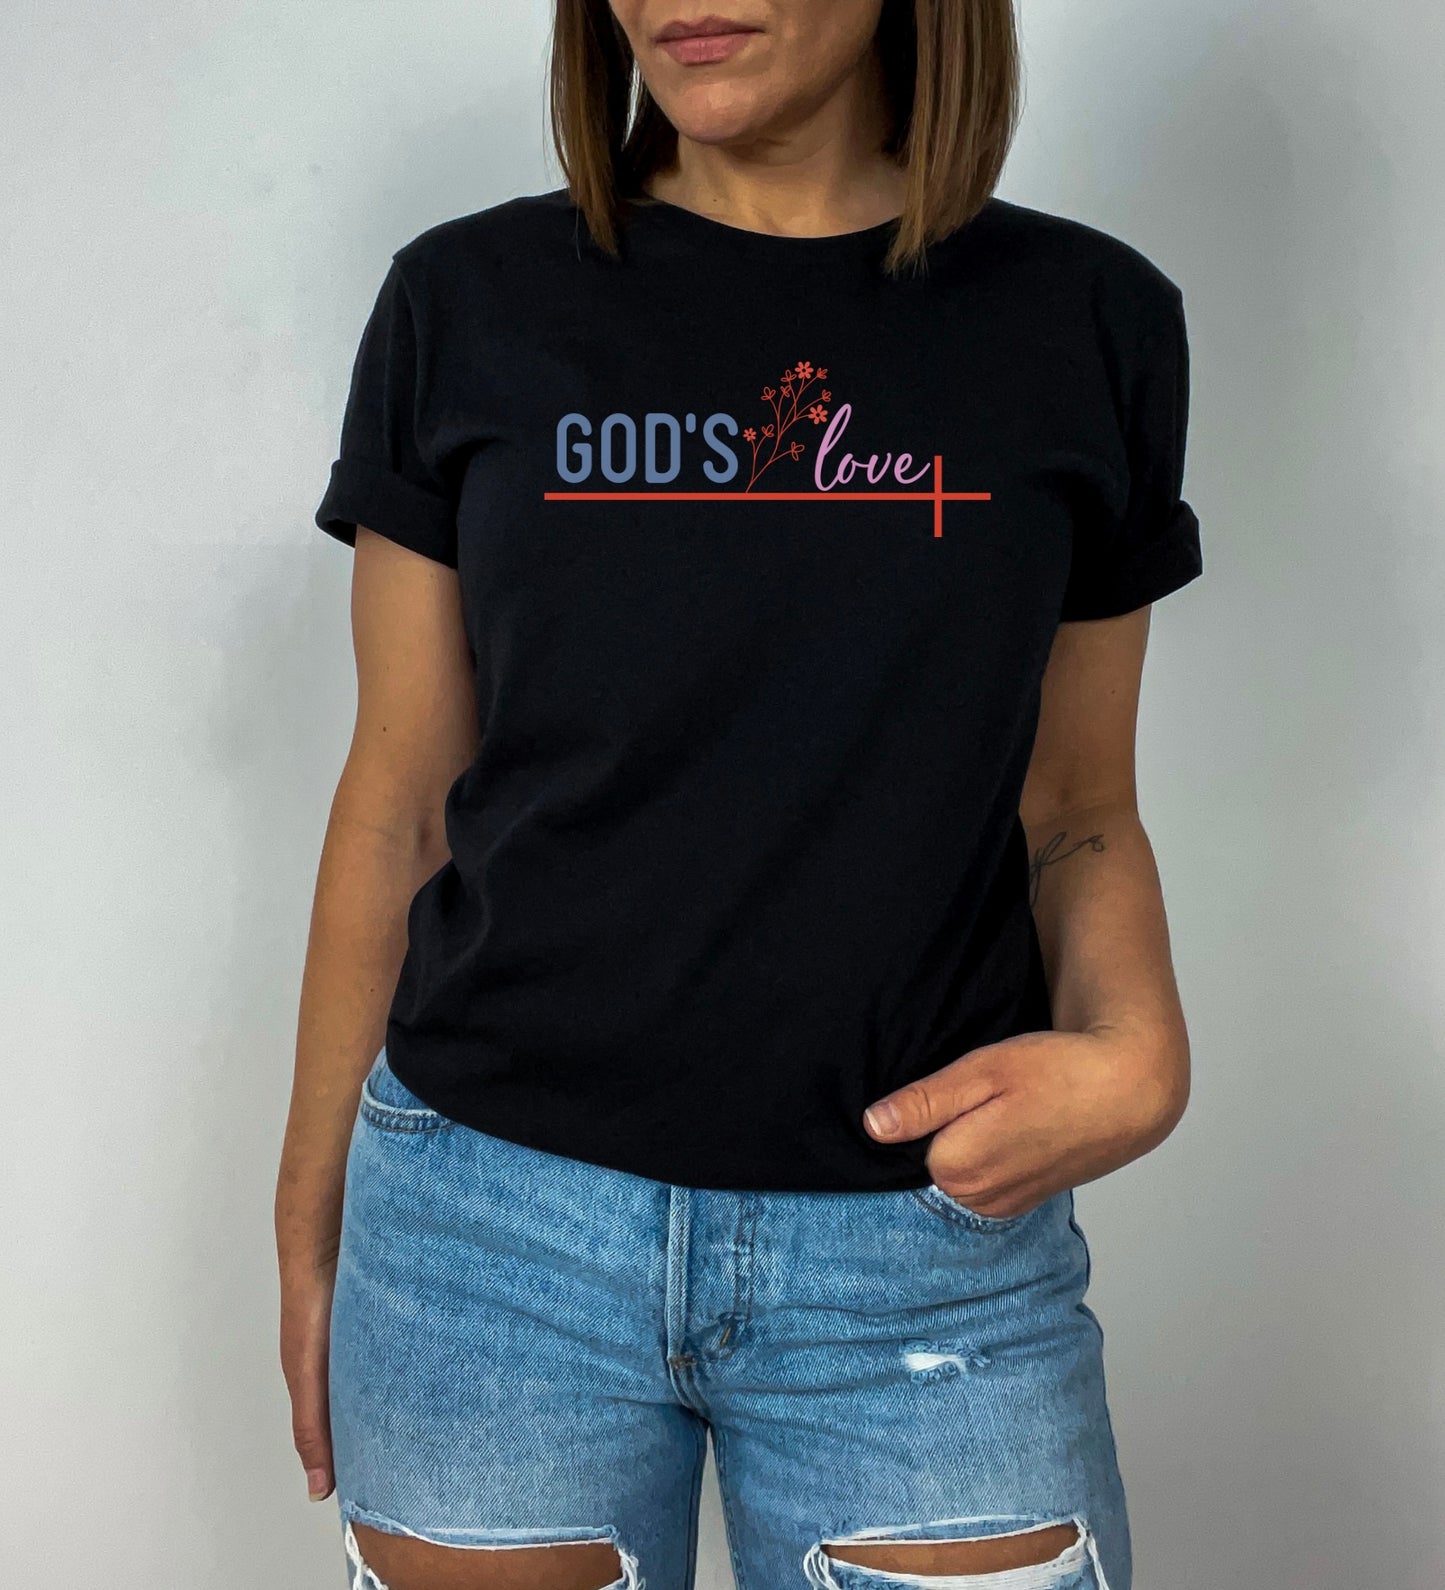 Gods Love Shirt, Christian Sweater, Catholic Sweatshirt, Religious Gift, Godly Clothing, Jesus Tee, Spiritual Gift, Bible Quote Shirt